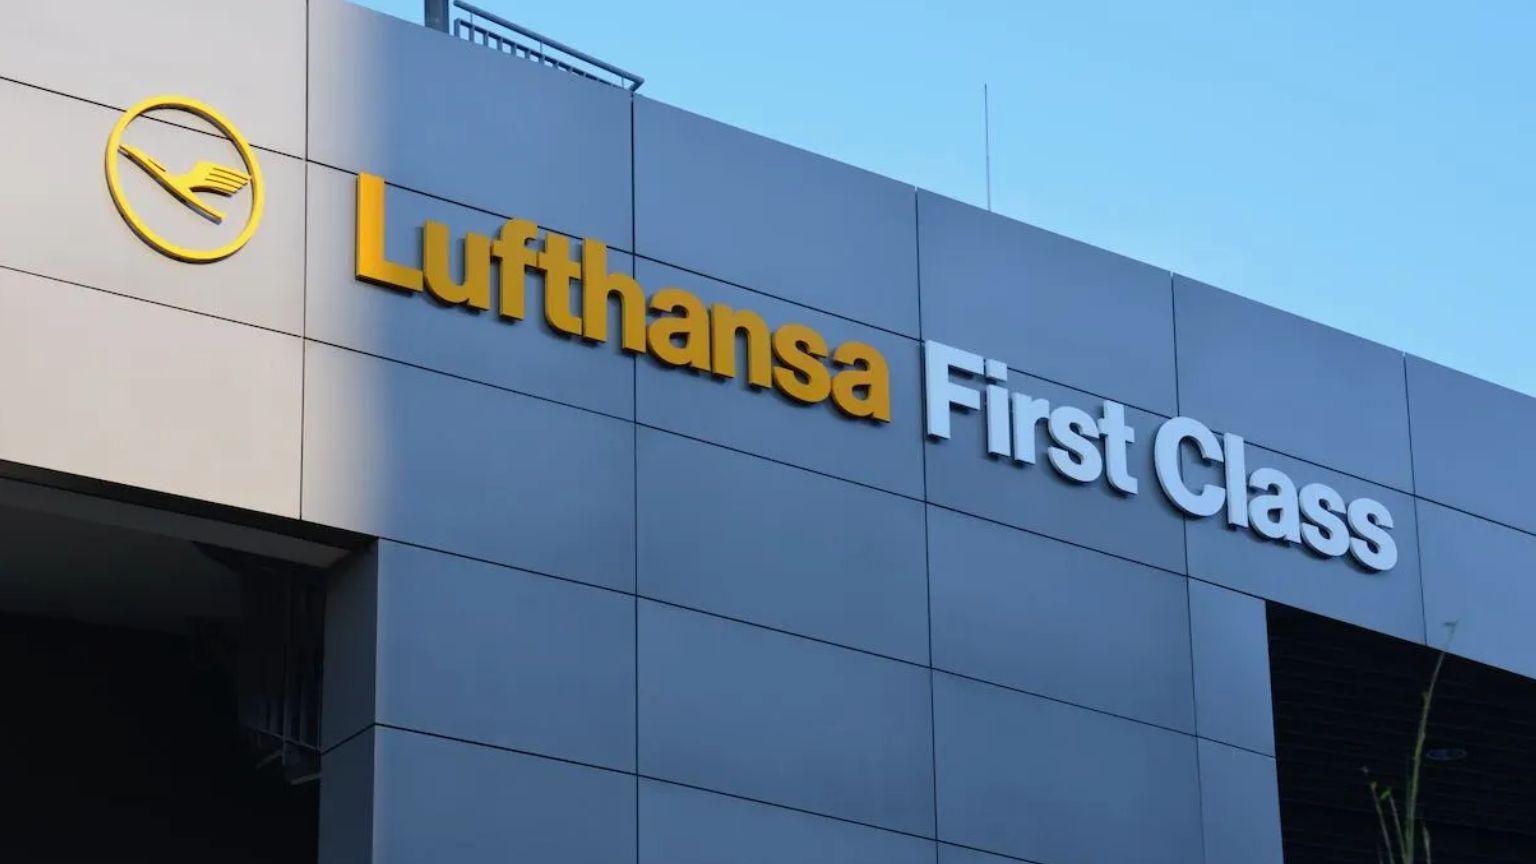 Lufthansa First Class Lounge Frankfurt, Terminal 1 – Concourse A